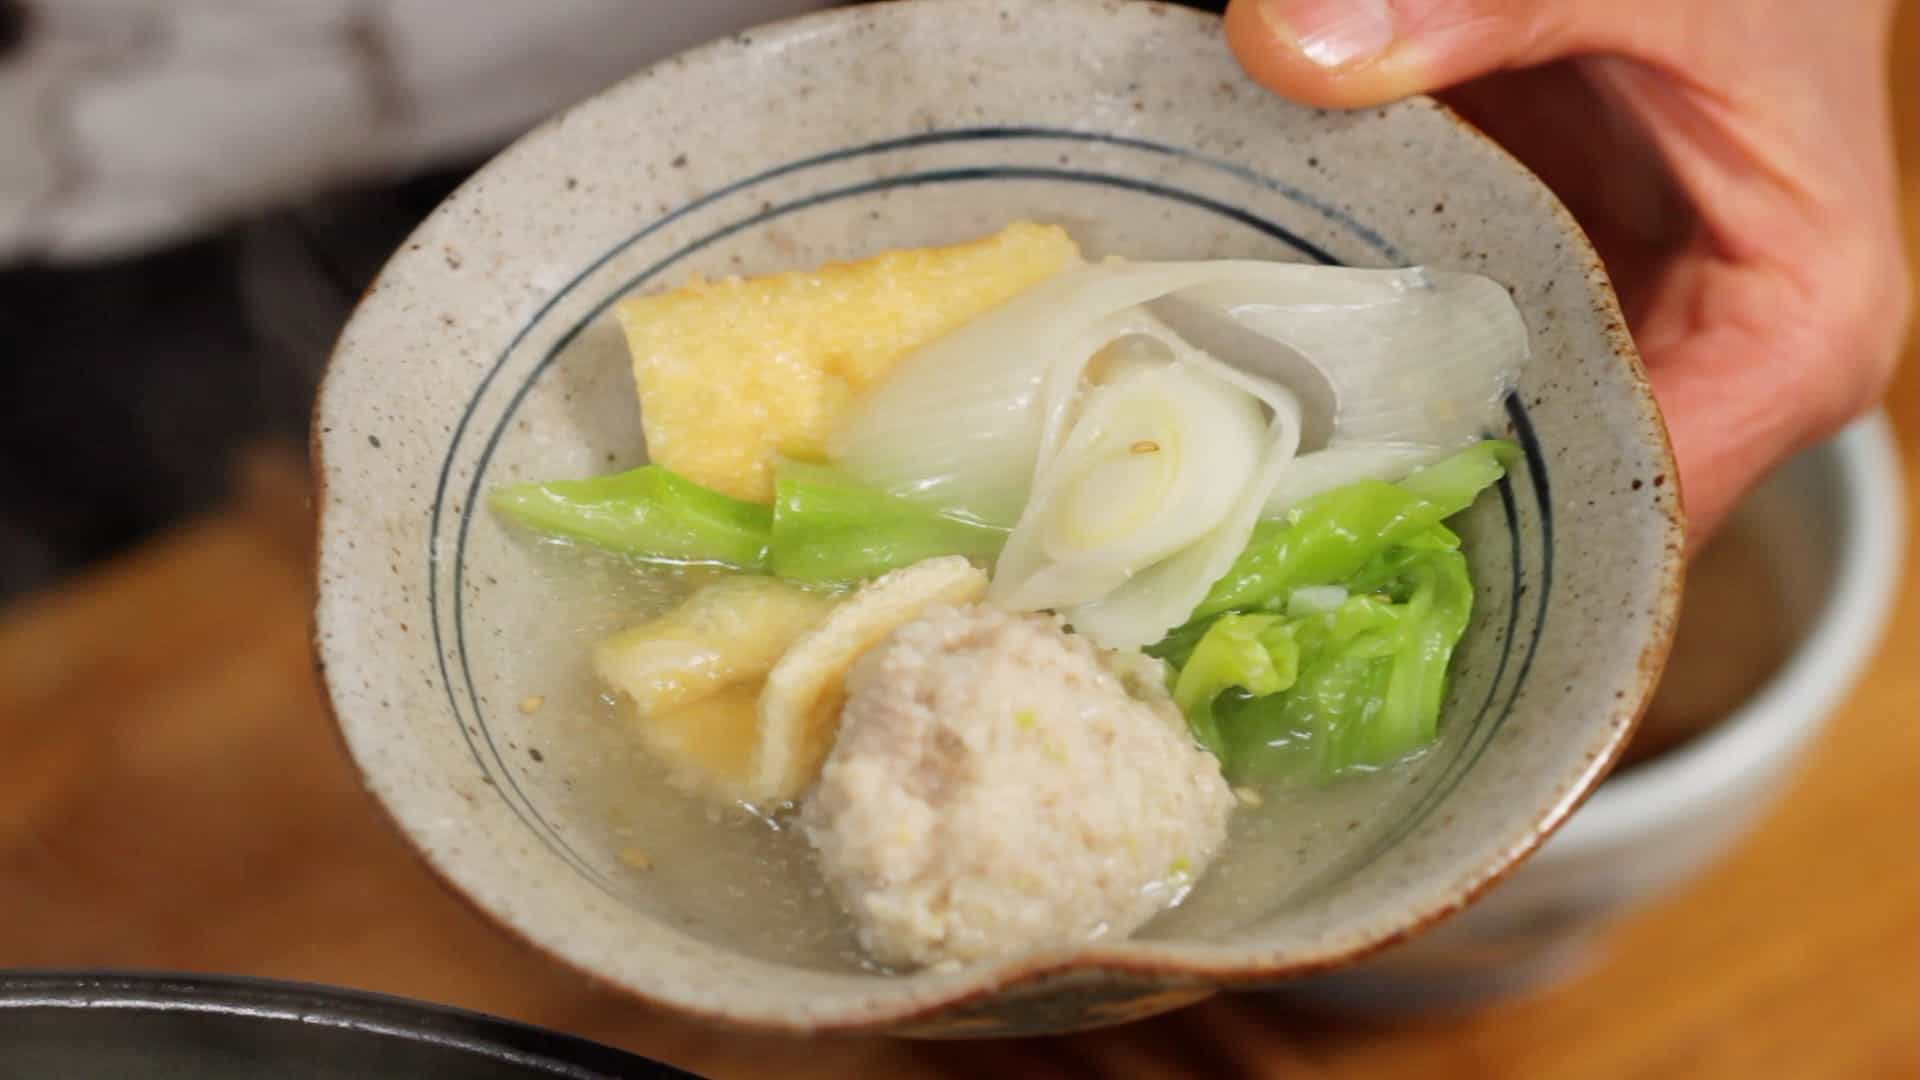 https://cookingwithdog.com/wp-content/uploads/2018/01/chankonabe-18.jpg